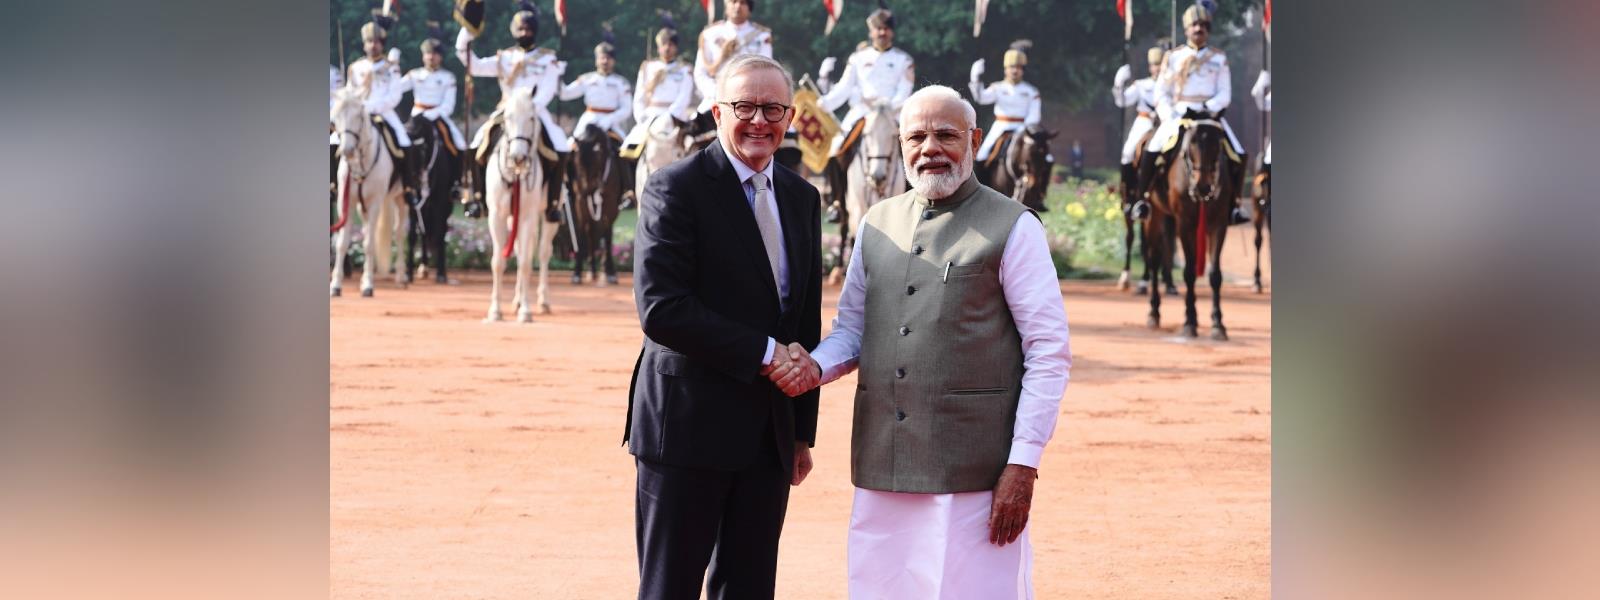 Prime Minister Shri Narendra Modi received H. E. Mr. Anthony Albanese, Prime Minister of Australia for a ceremonial welcome at Rashtrapati Bhavan